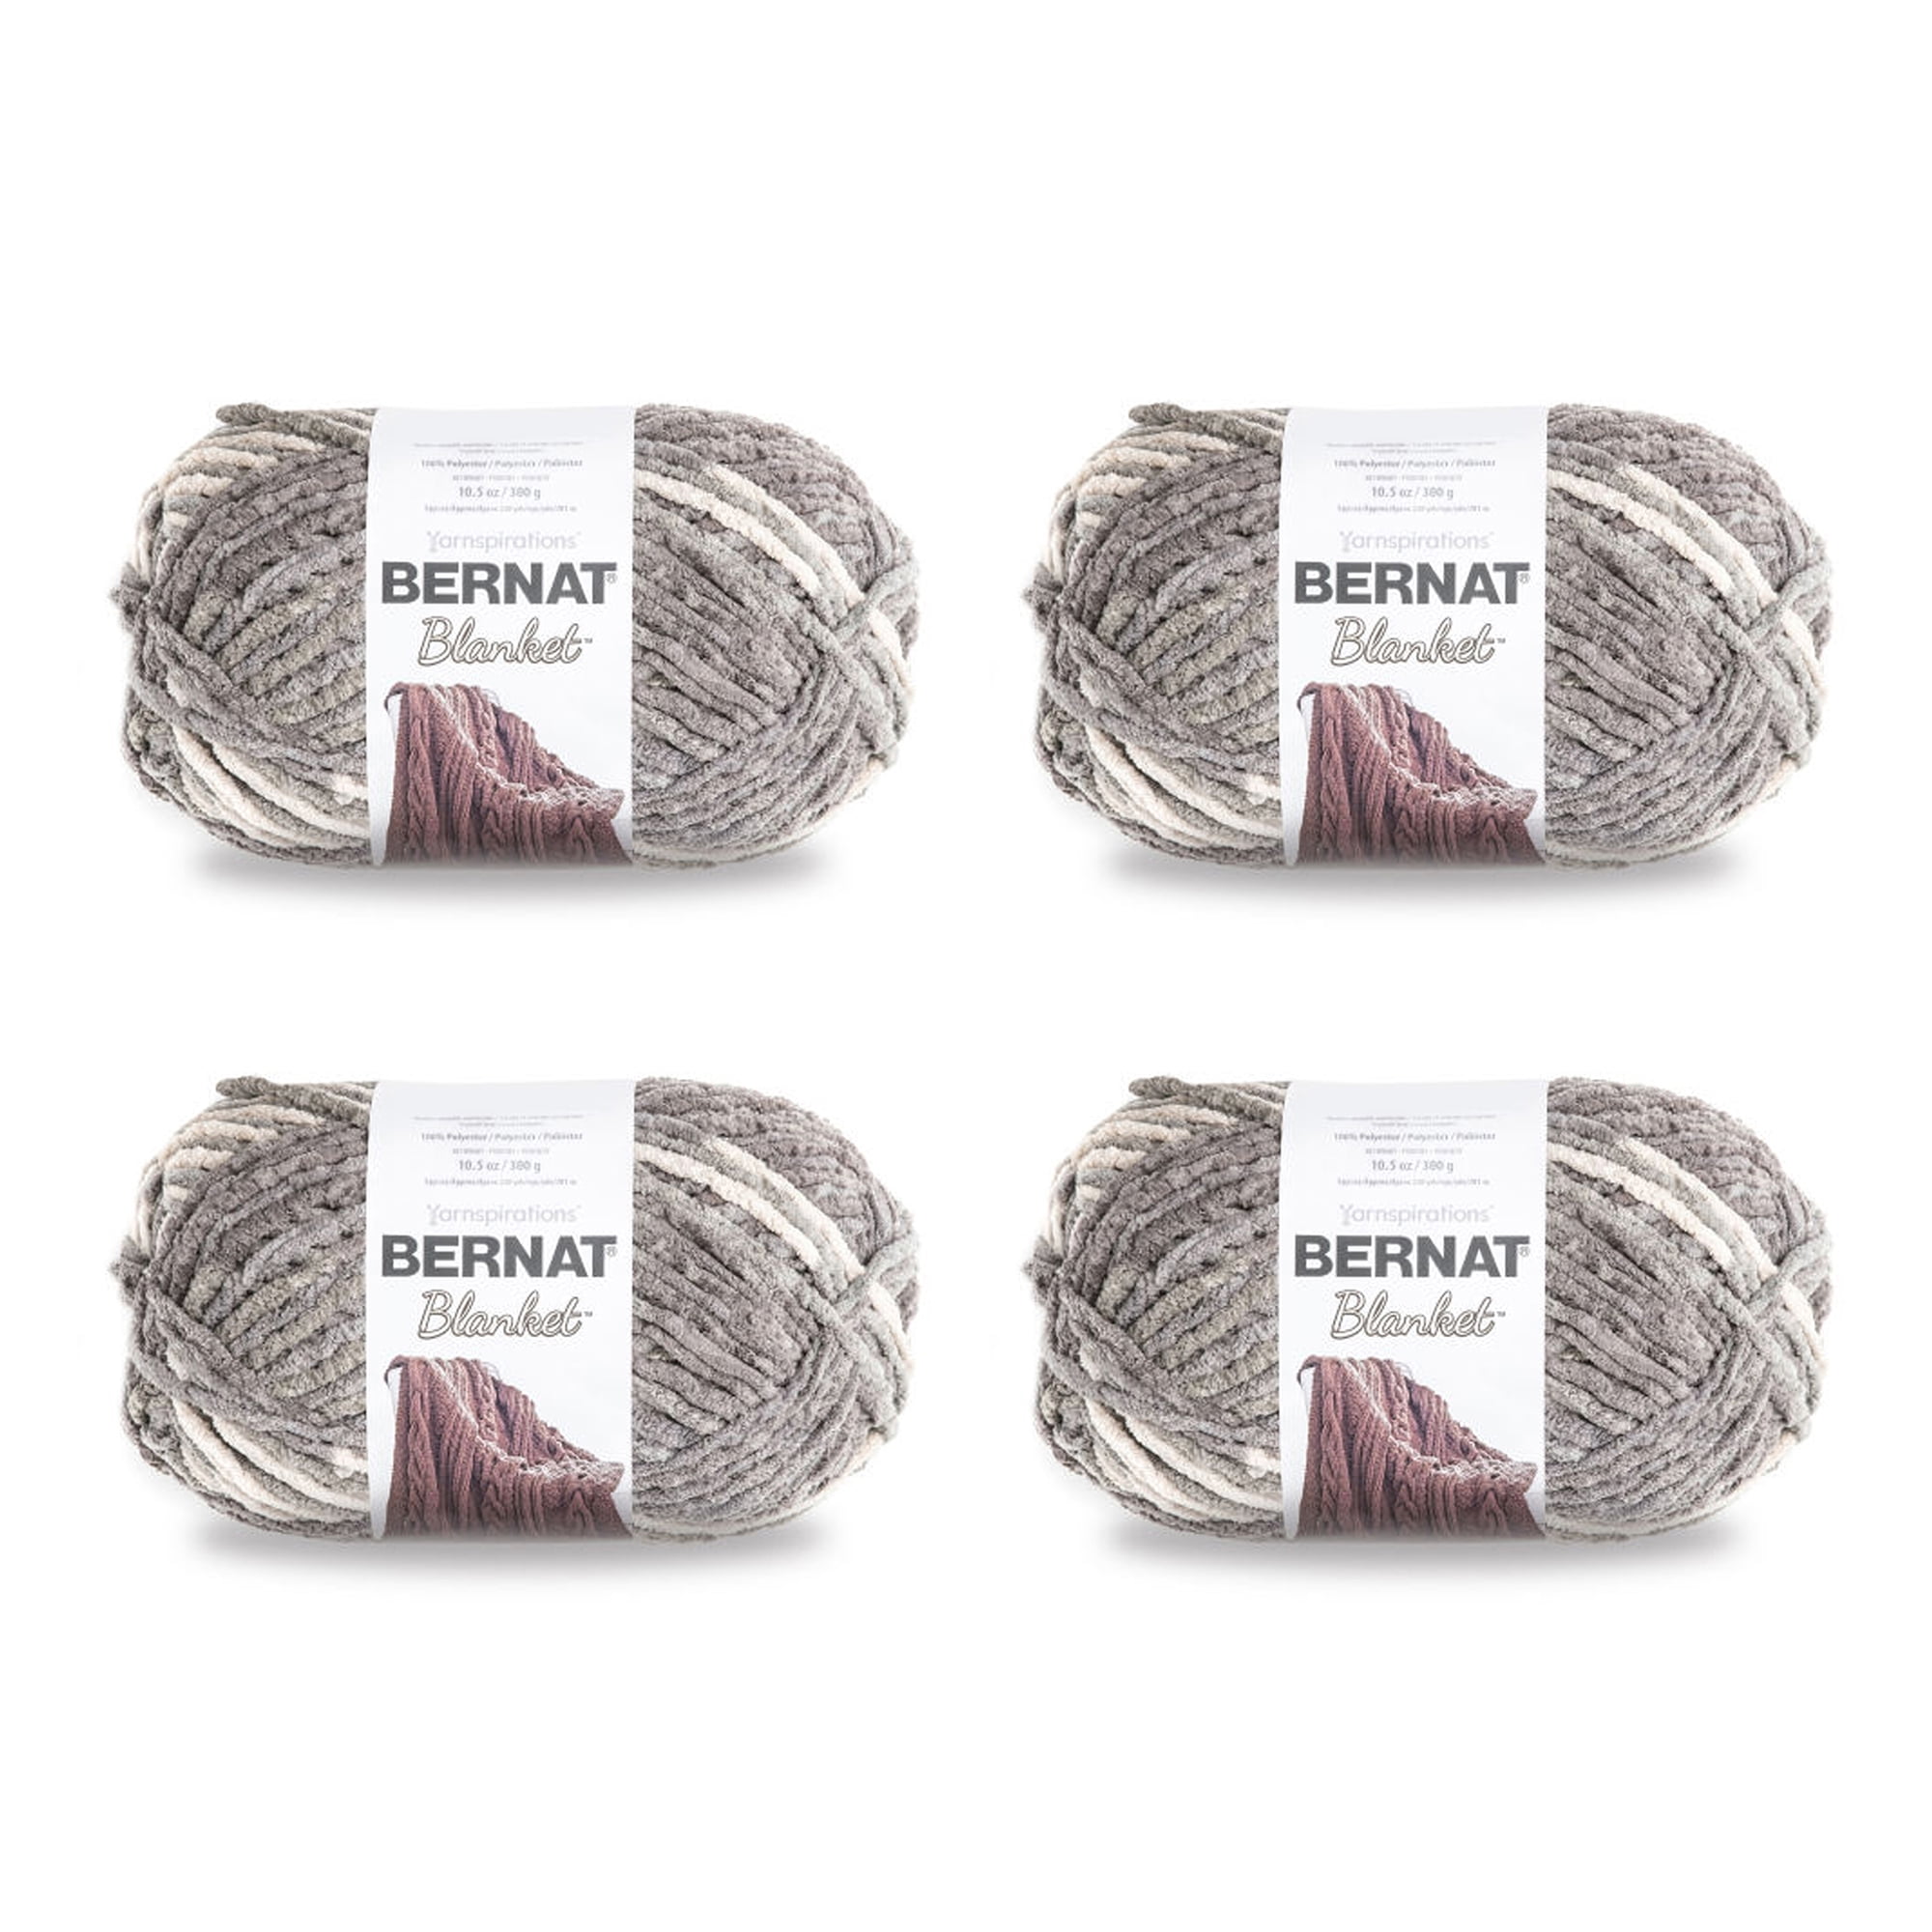 Bernat Blanket Raspberry Trifle Yarn - 2 Pack of 300g/10.5oz - Polyester -  6 Super Bulky - 220 Yards - Knitting/Crochet